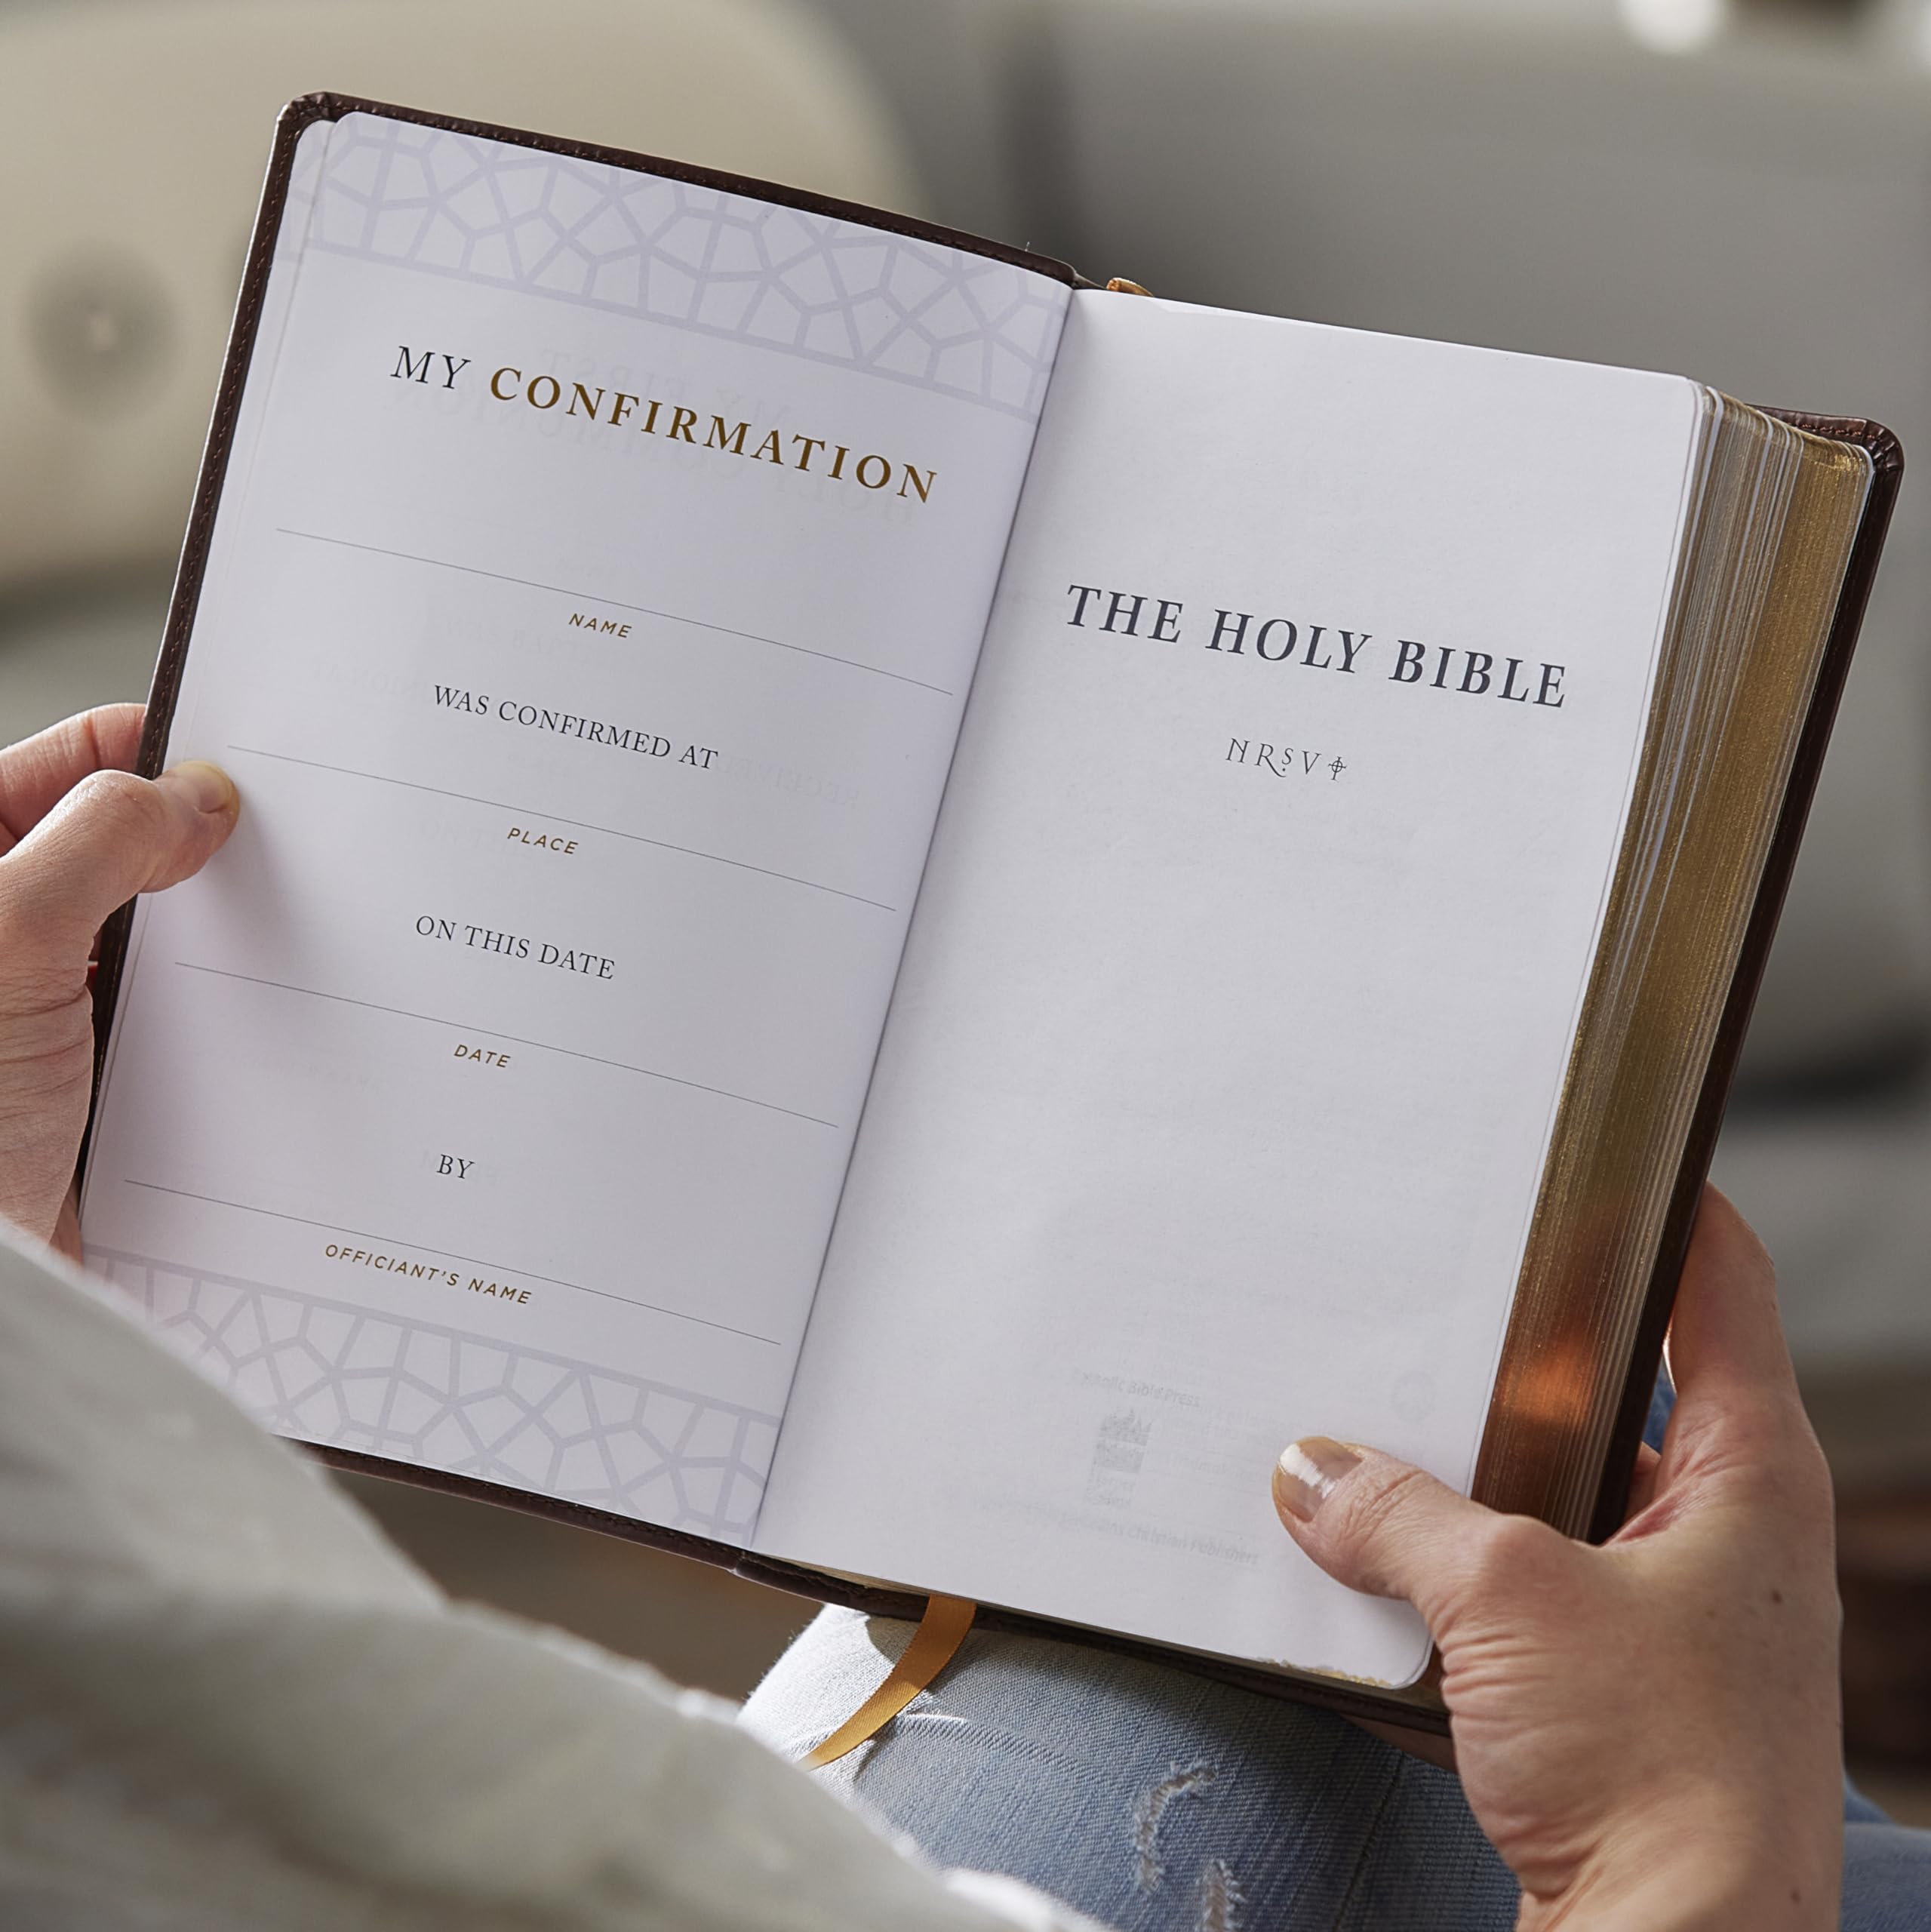 NRSVCE Sacraments of Initiation Catholic Bible, Purple Leathersoft, Comfort Print